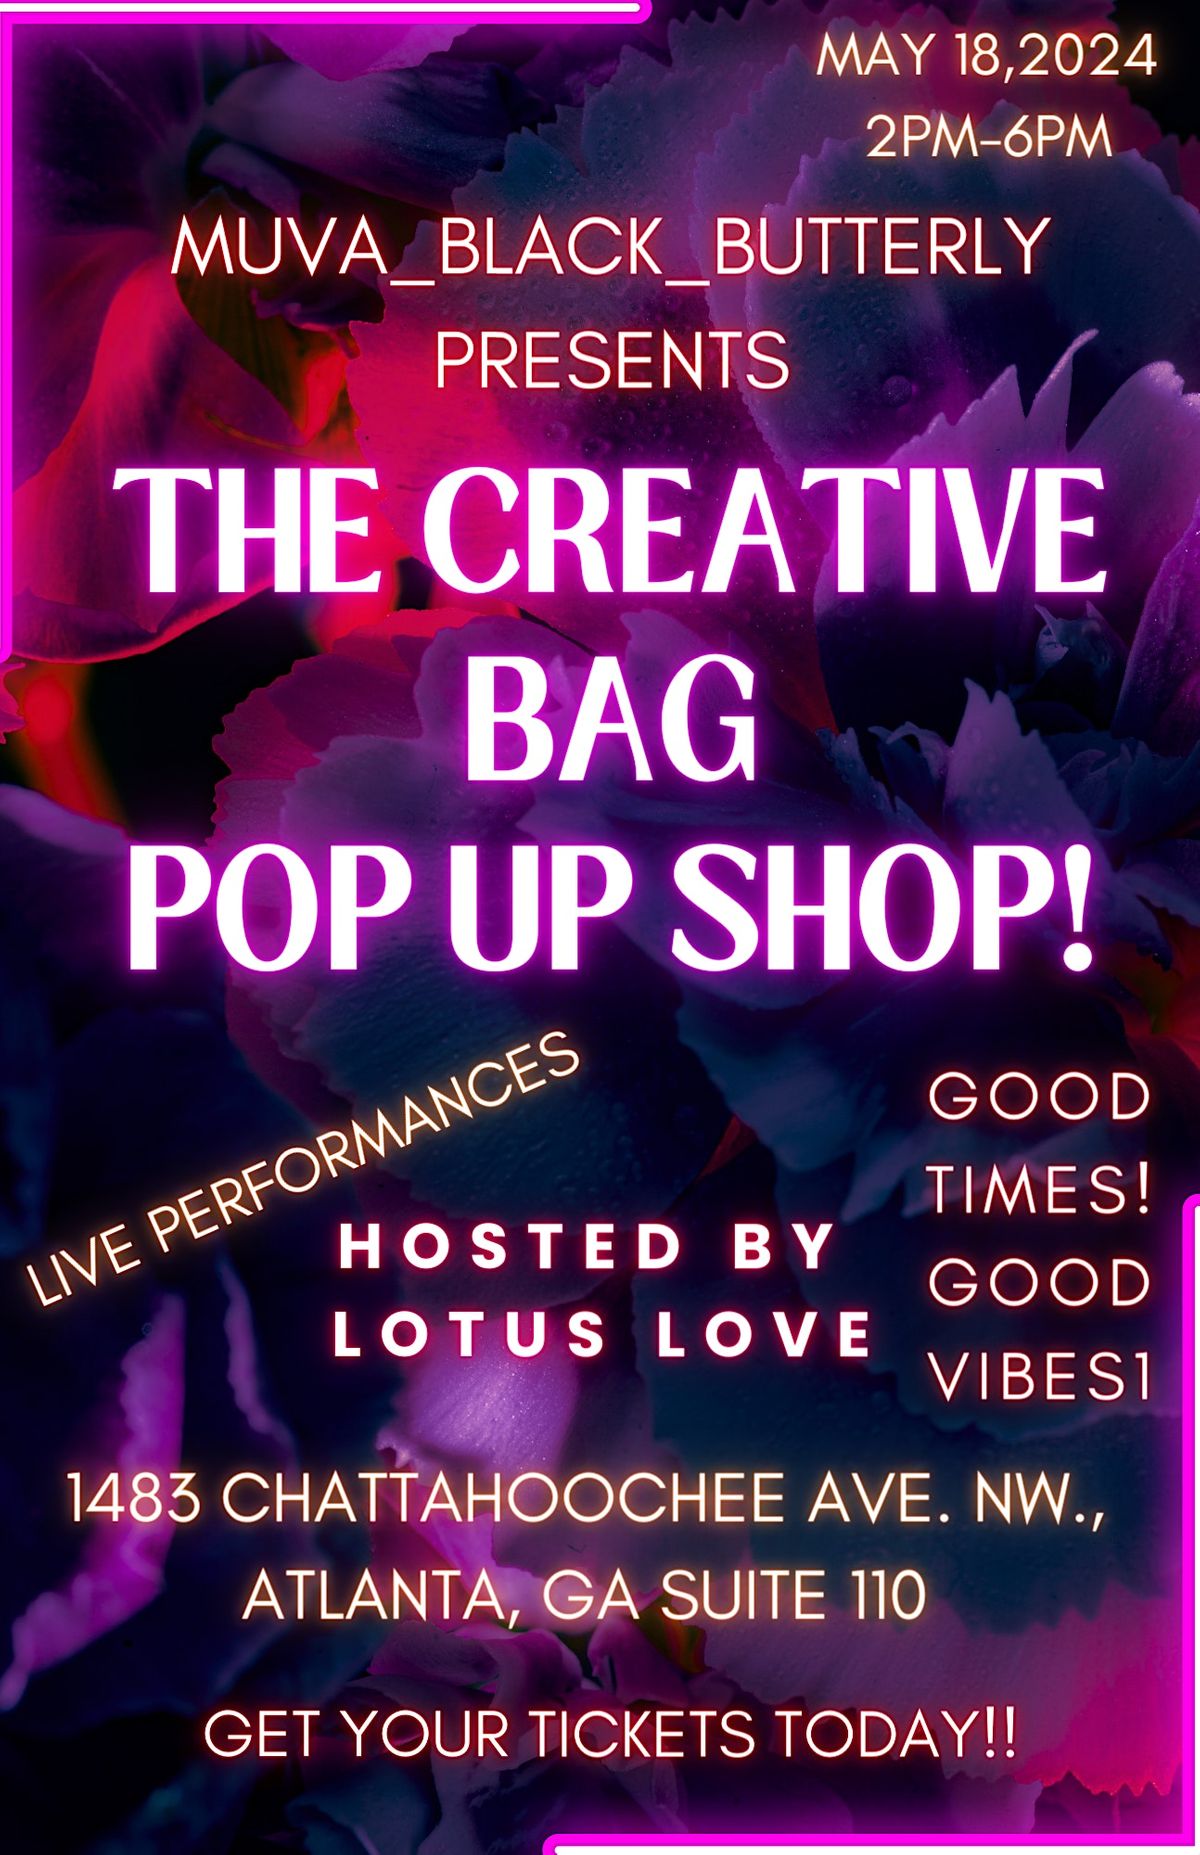 The Creative Bag Pop Up Shop!